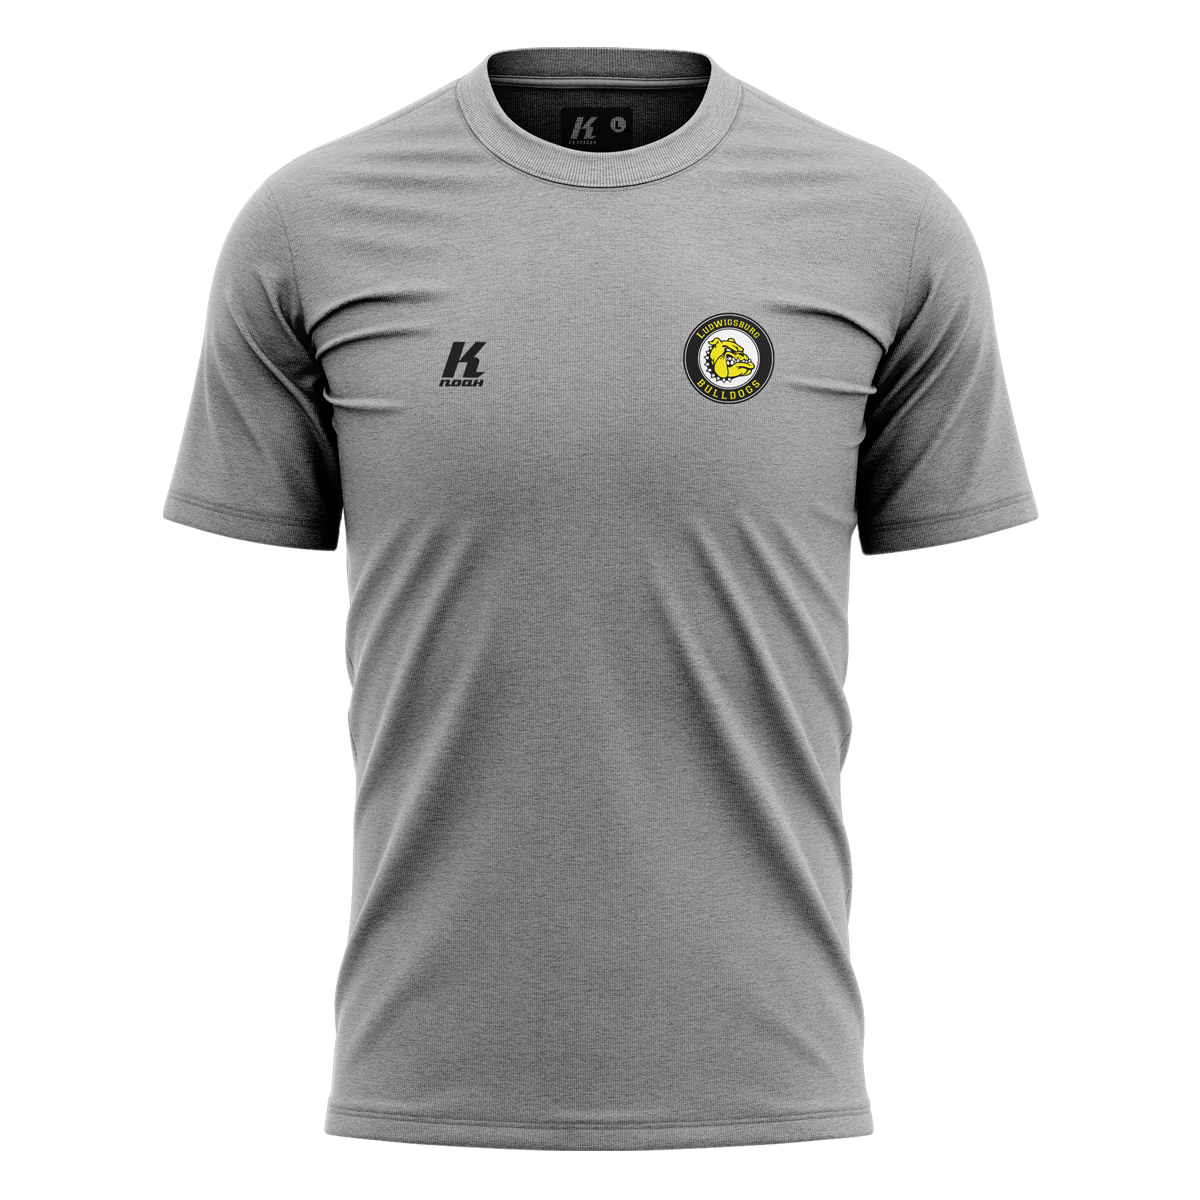 Tshirt1-Grey-Front